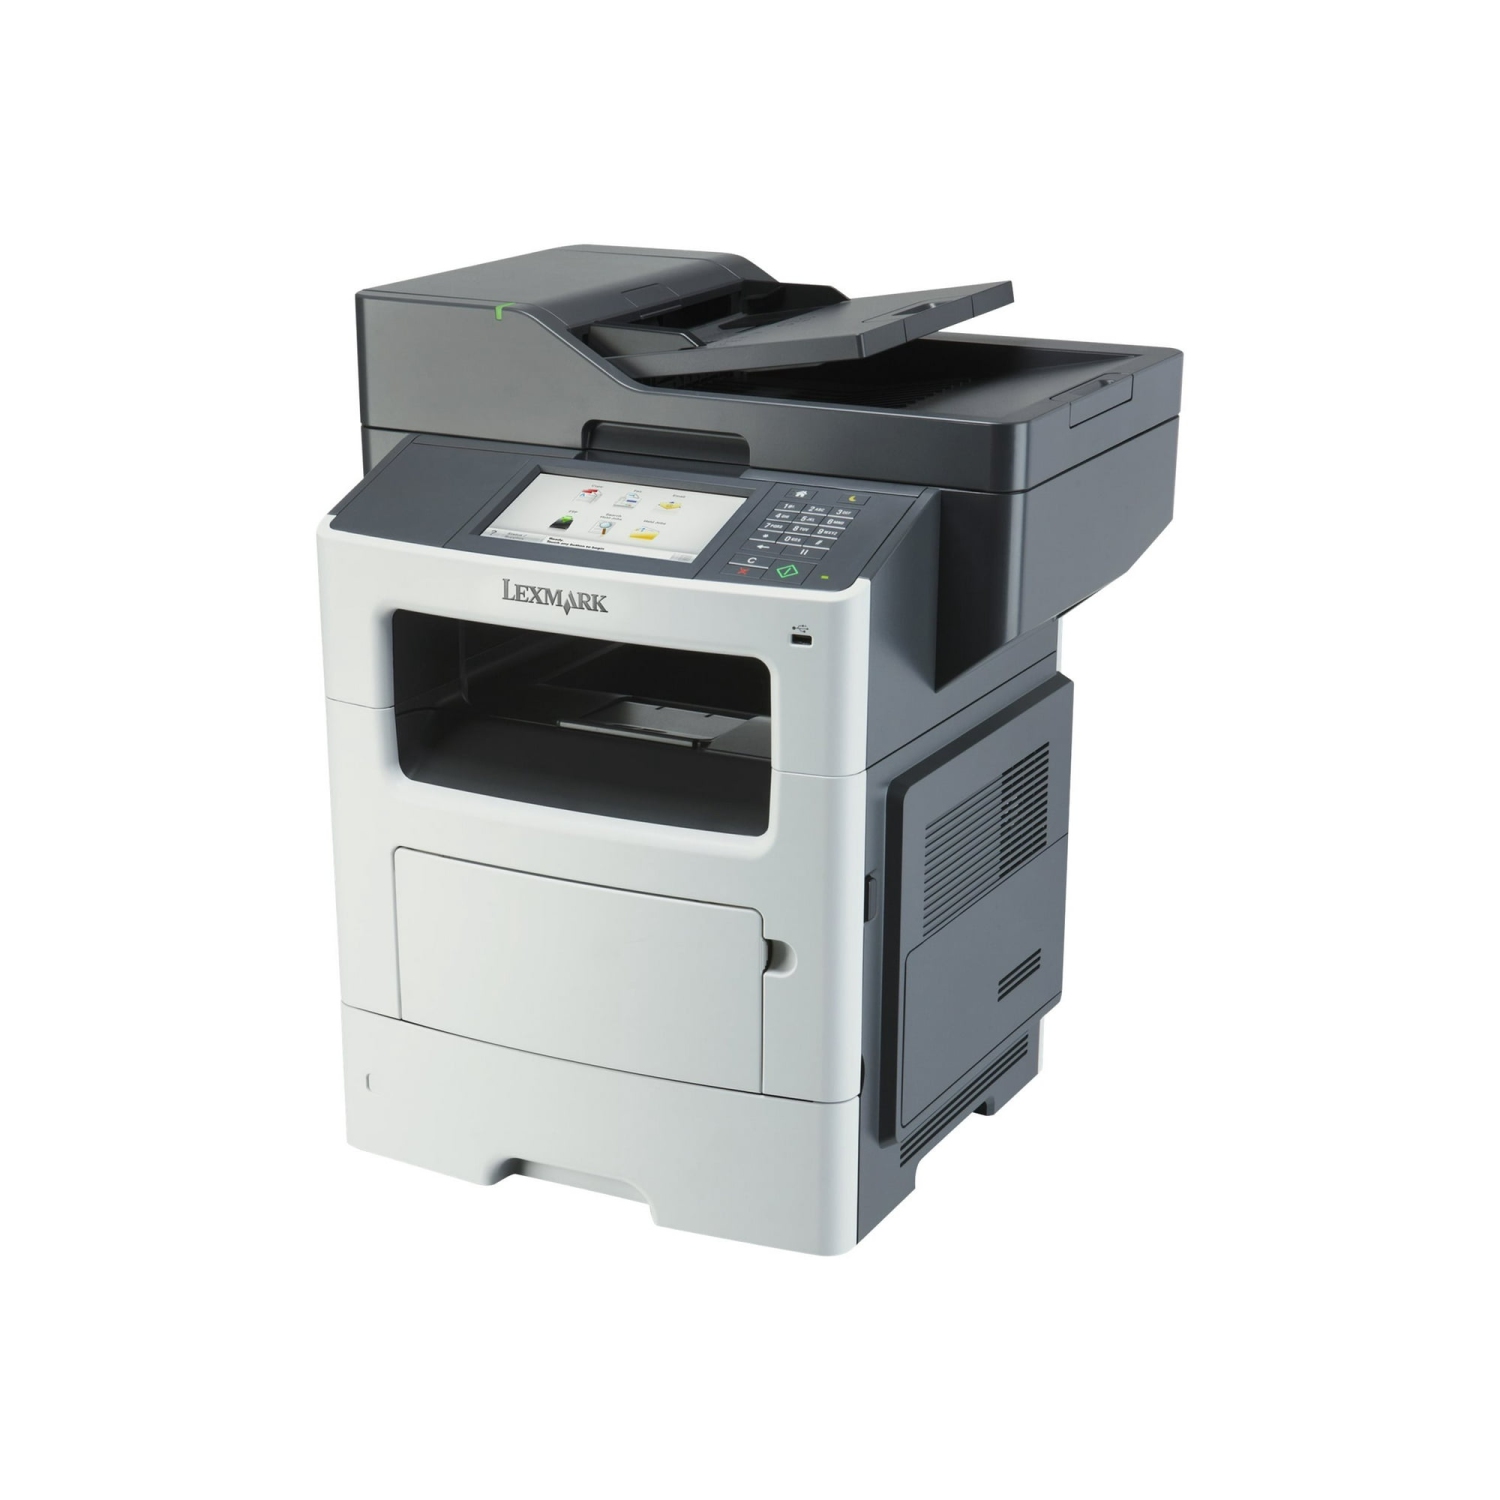 Refurbished (Good) Lexmark MX611de MX611 Laser All-In-One Printer Copier Scanner Fax Email 35S6701 USB|Network duplex With 90 Days Warranty